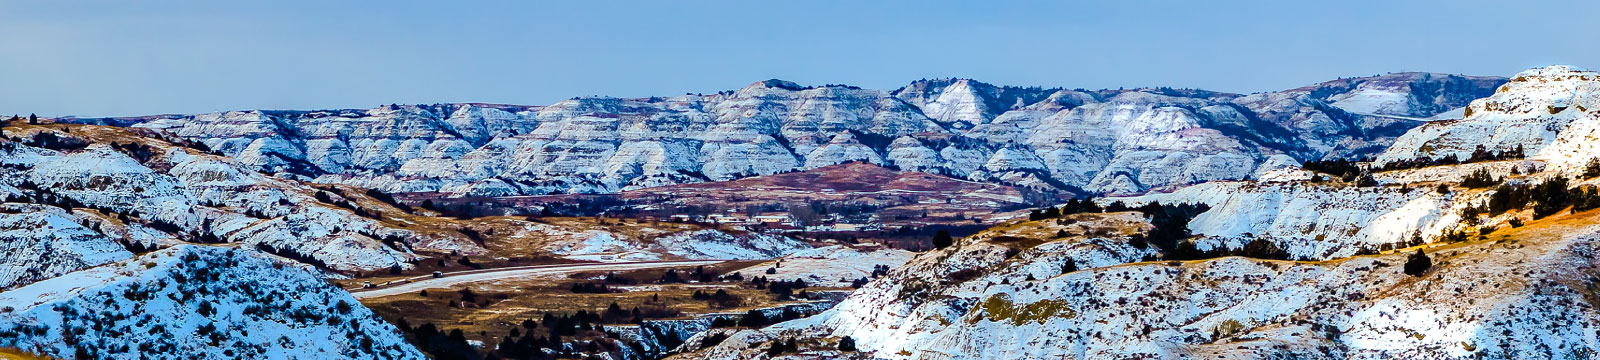 A snowy North Dakota landscape